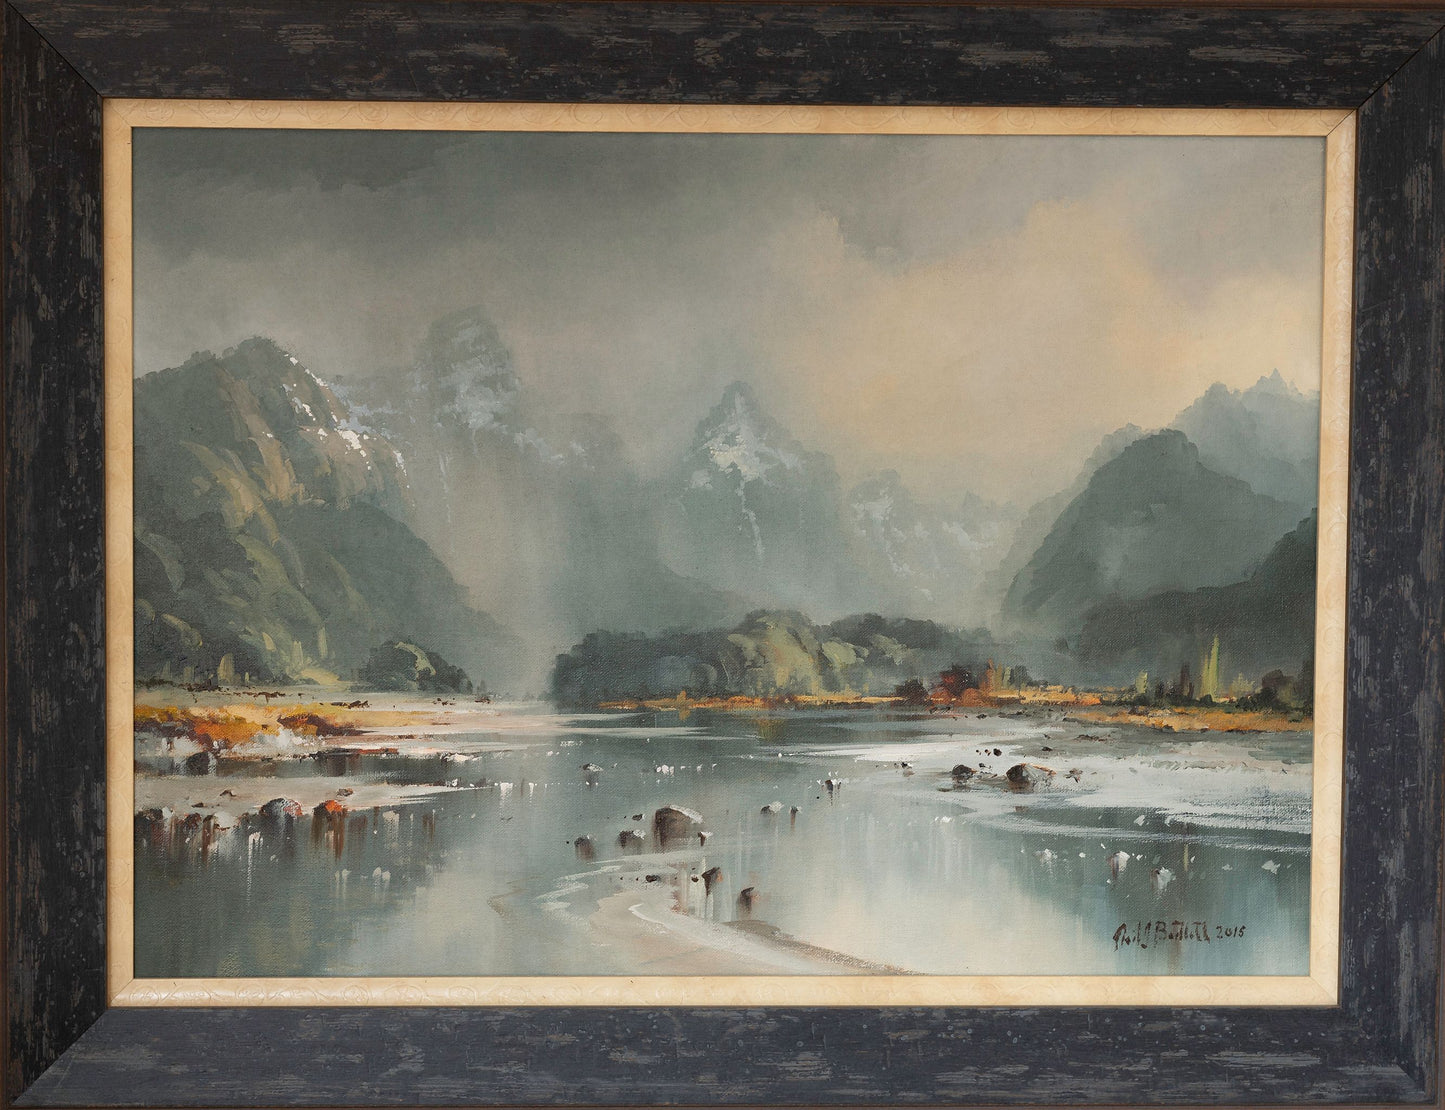 Framed Oil Painting by renowned landscape artist Neil J Bartlett Dart Valley Glenorchy near Queenstown NZ Silver Fern Gallery